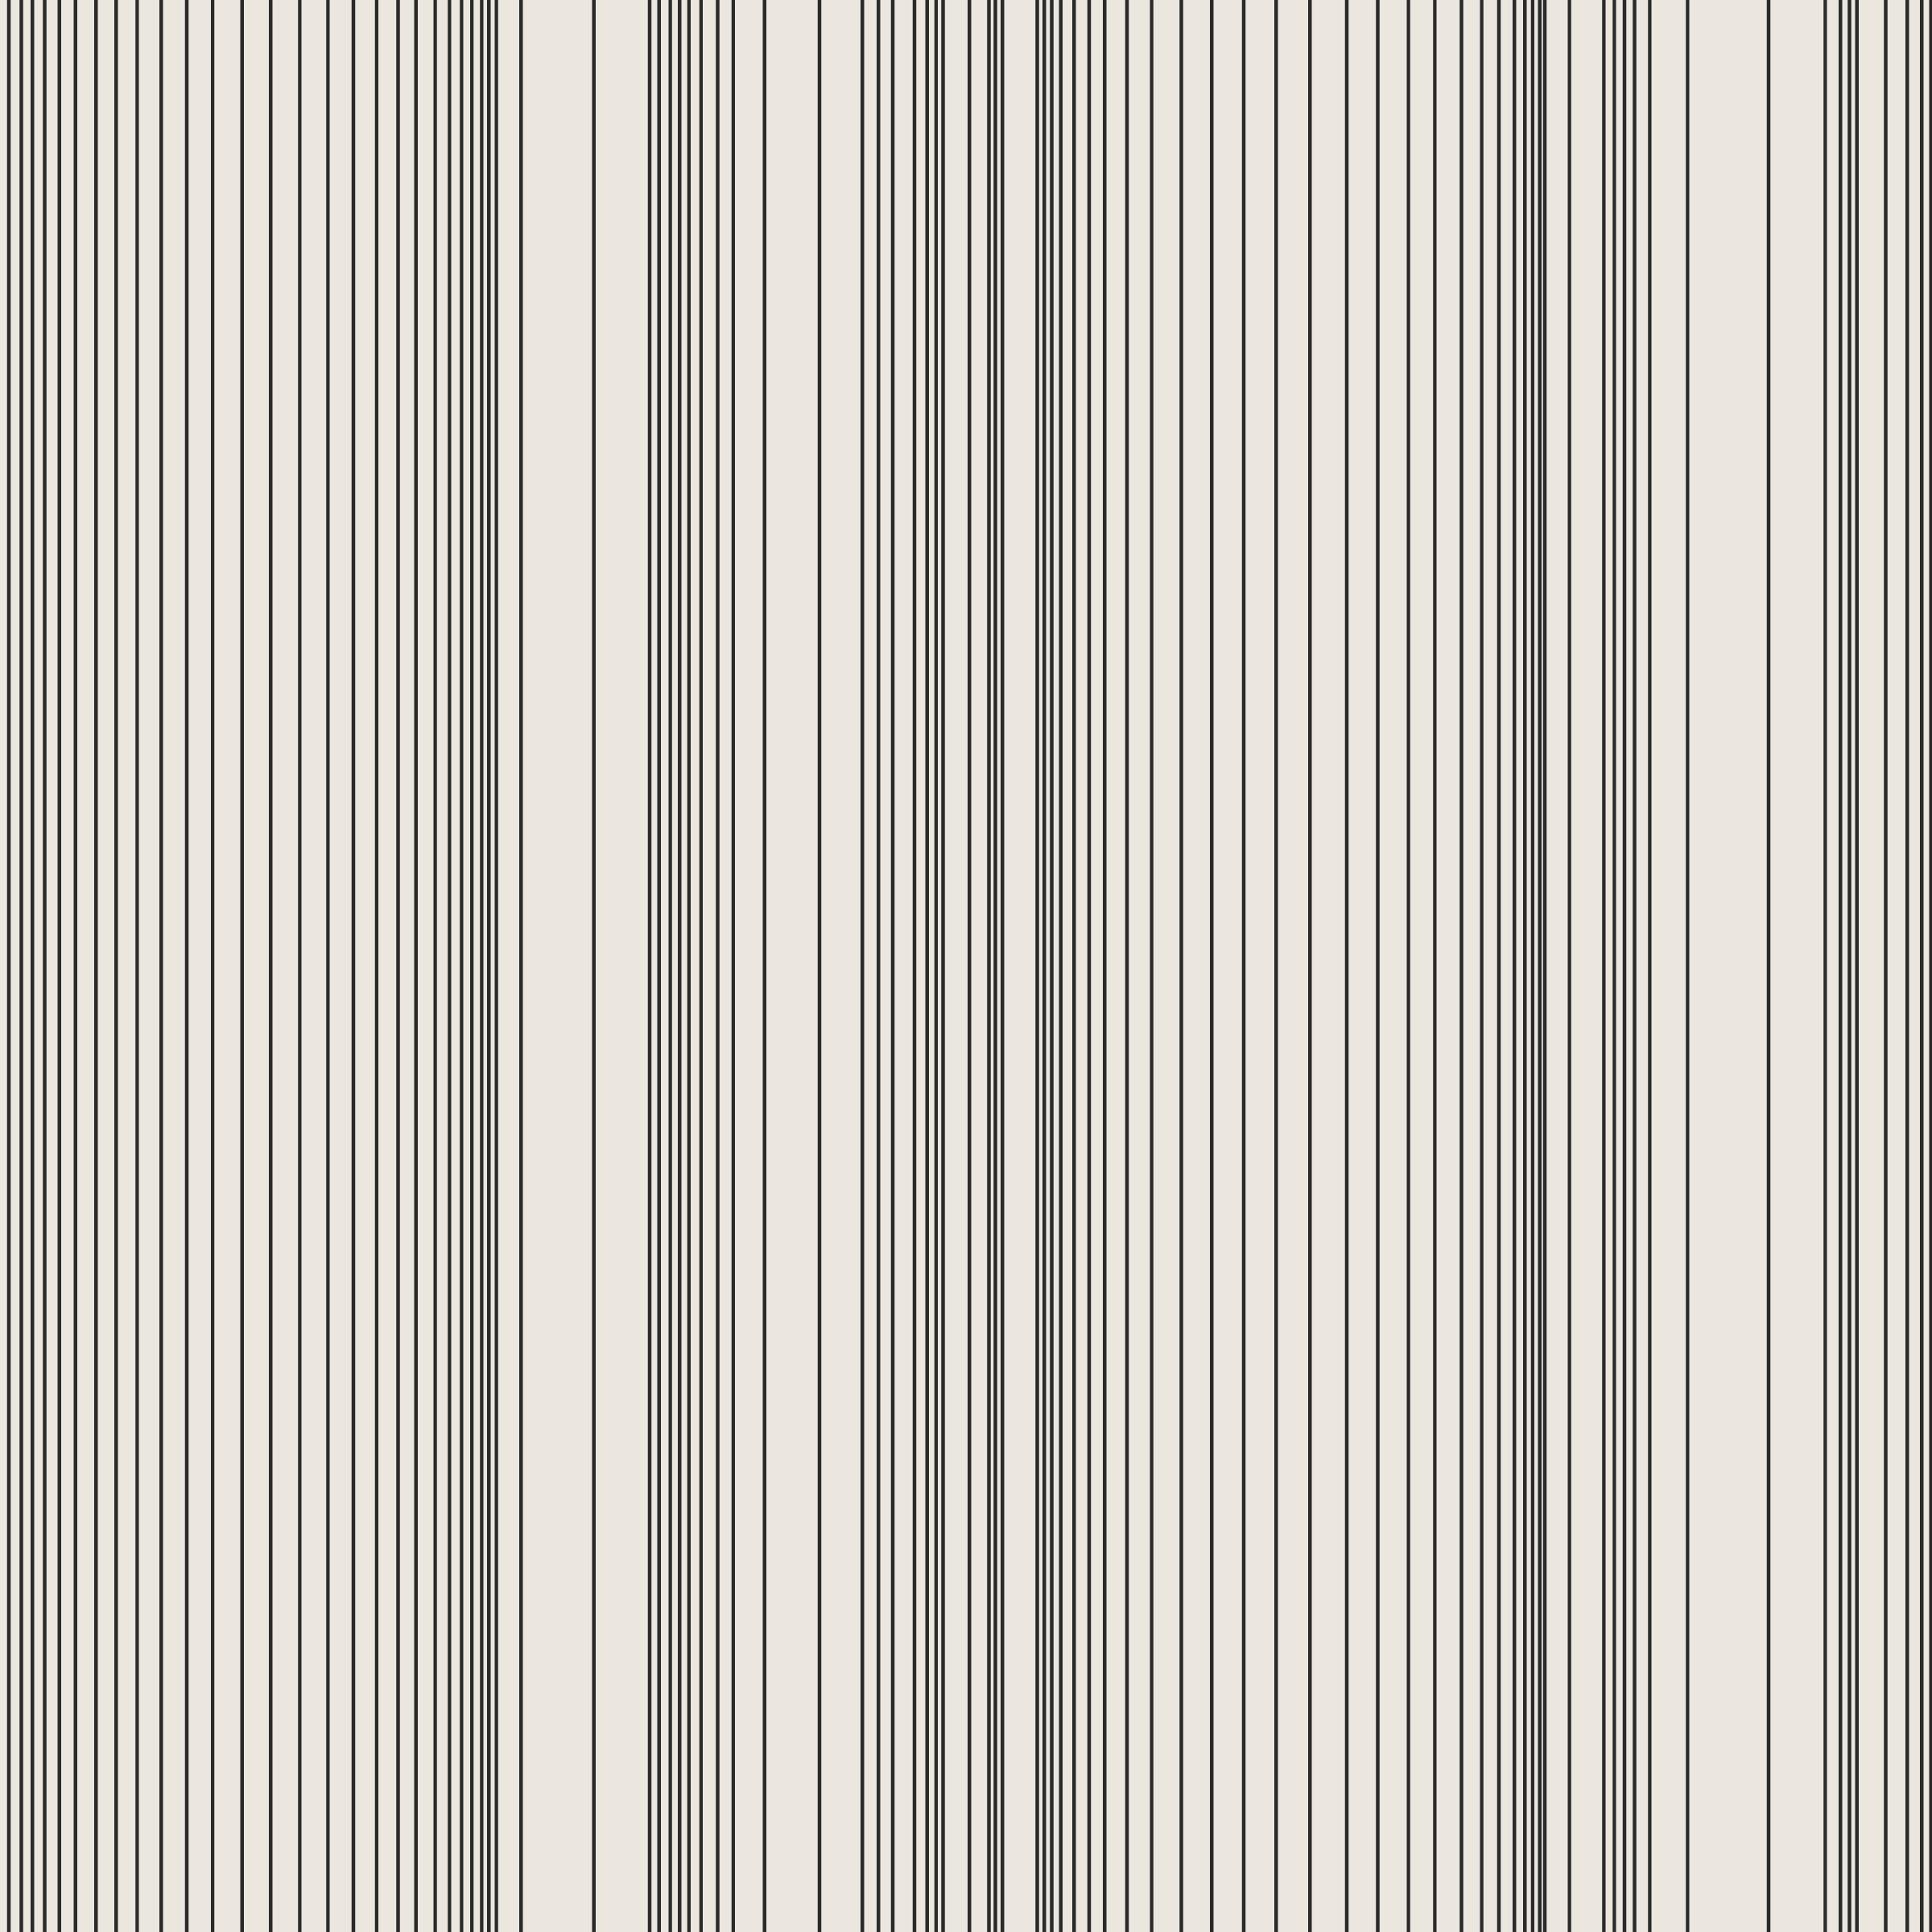 Encoded Stripe - Black and White (Copy)